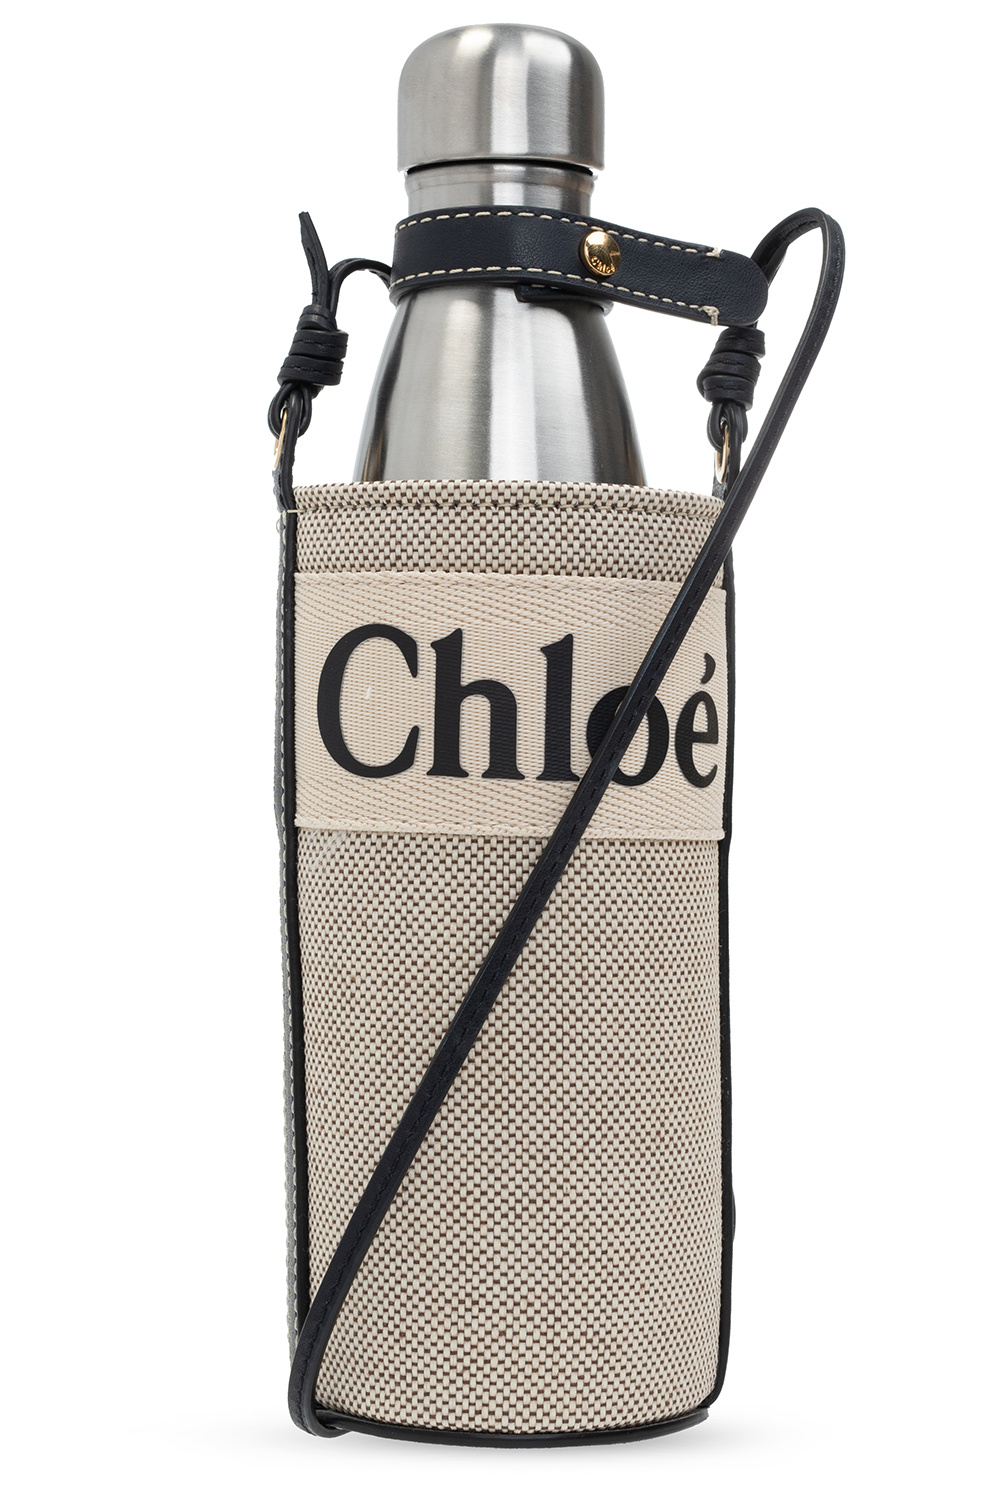 Chloé chloe black small drew shoulder bag item